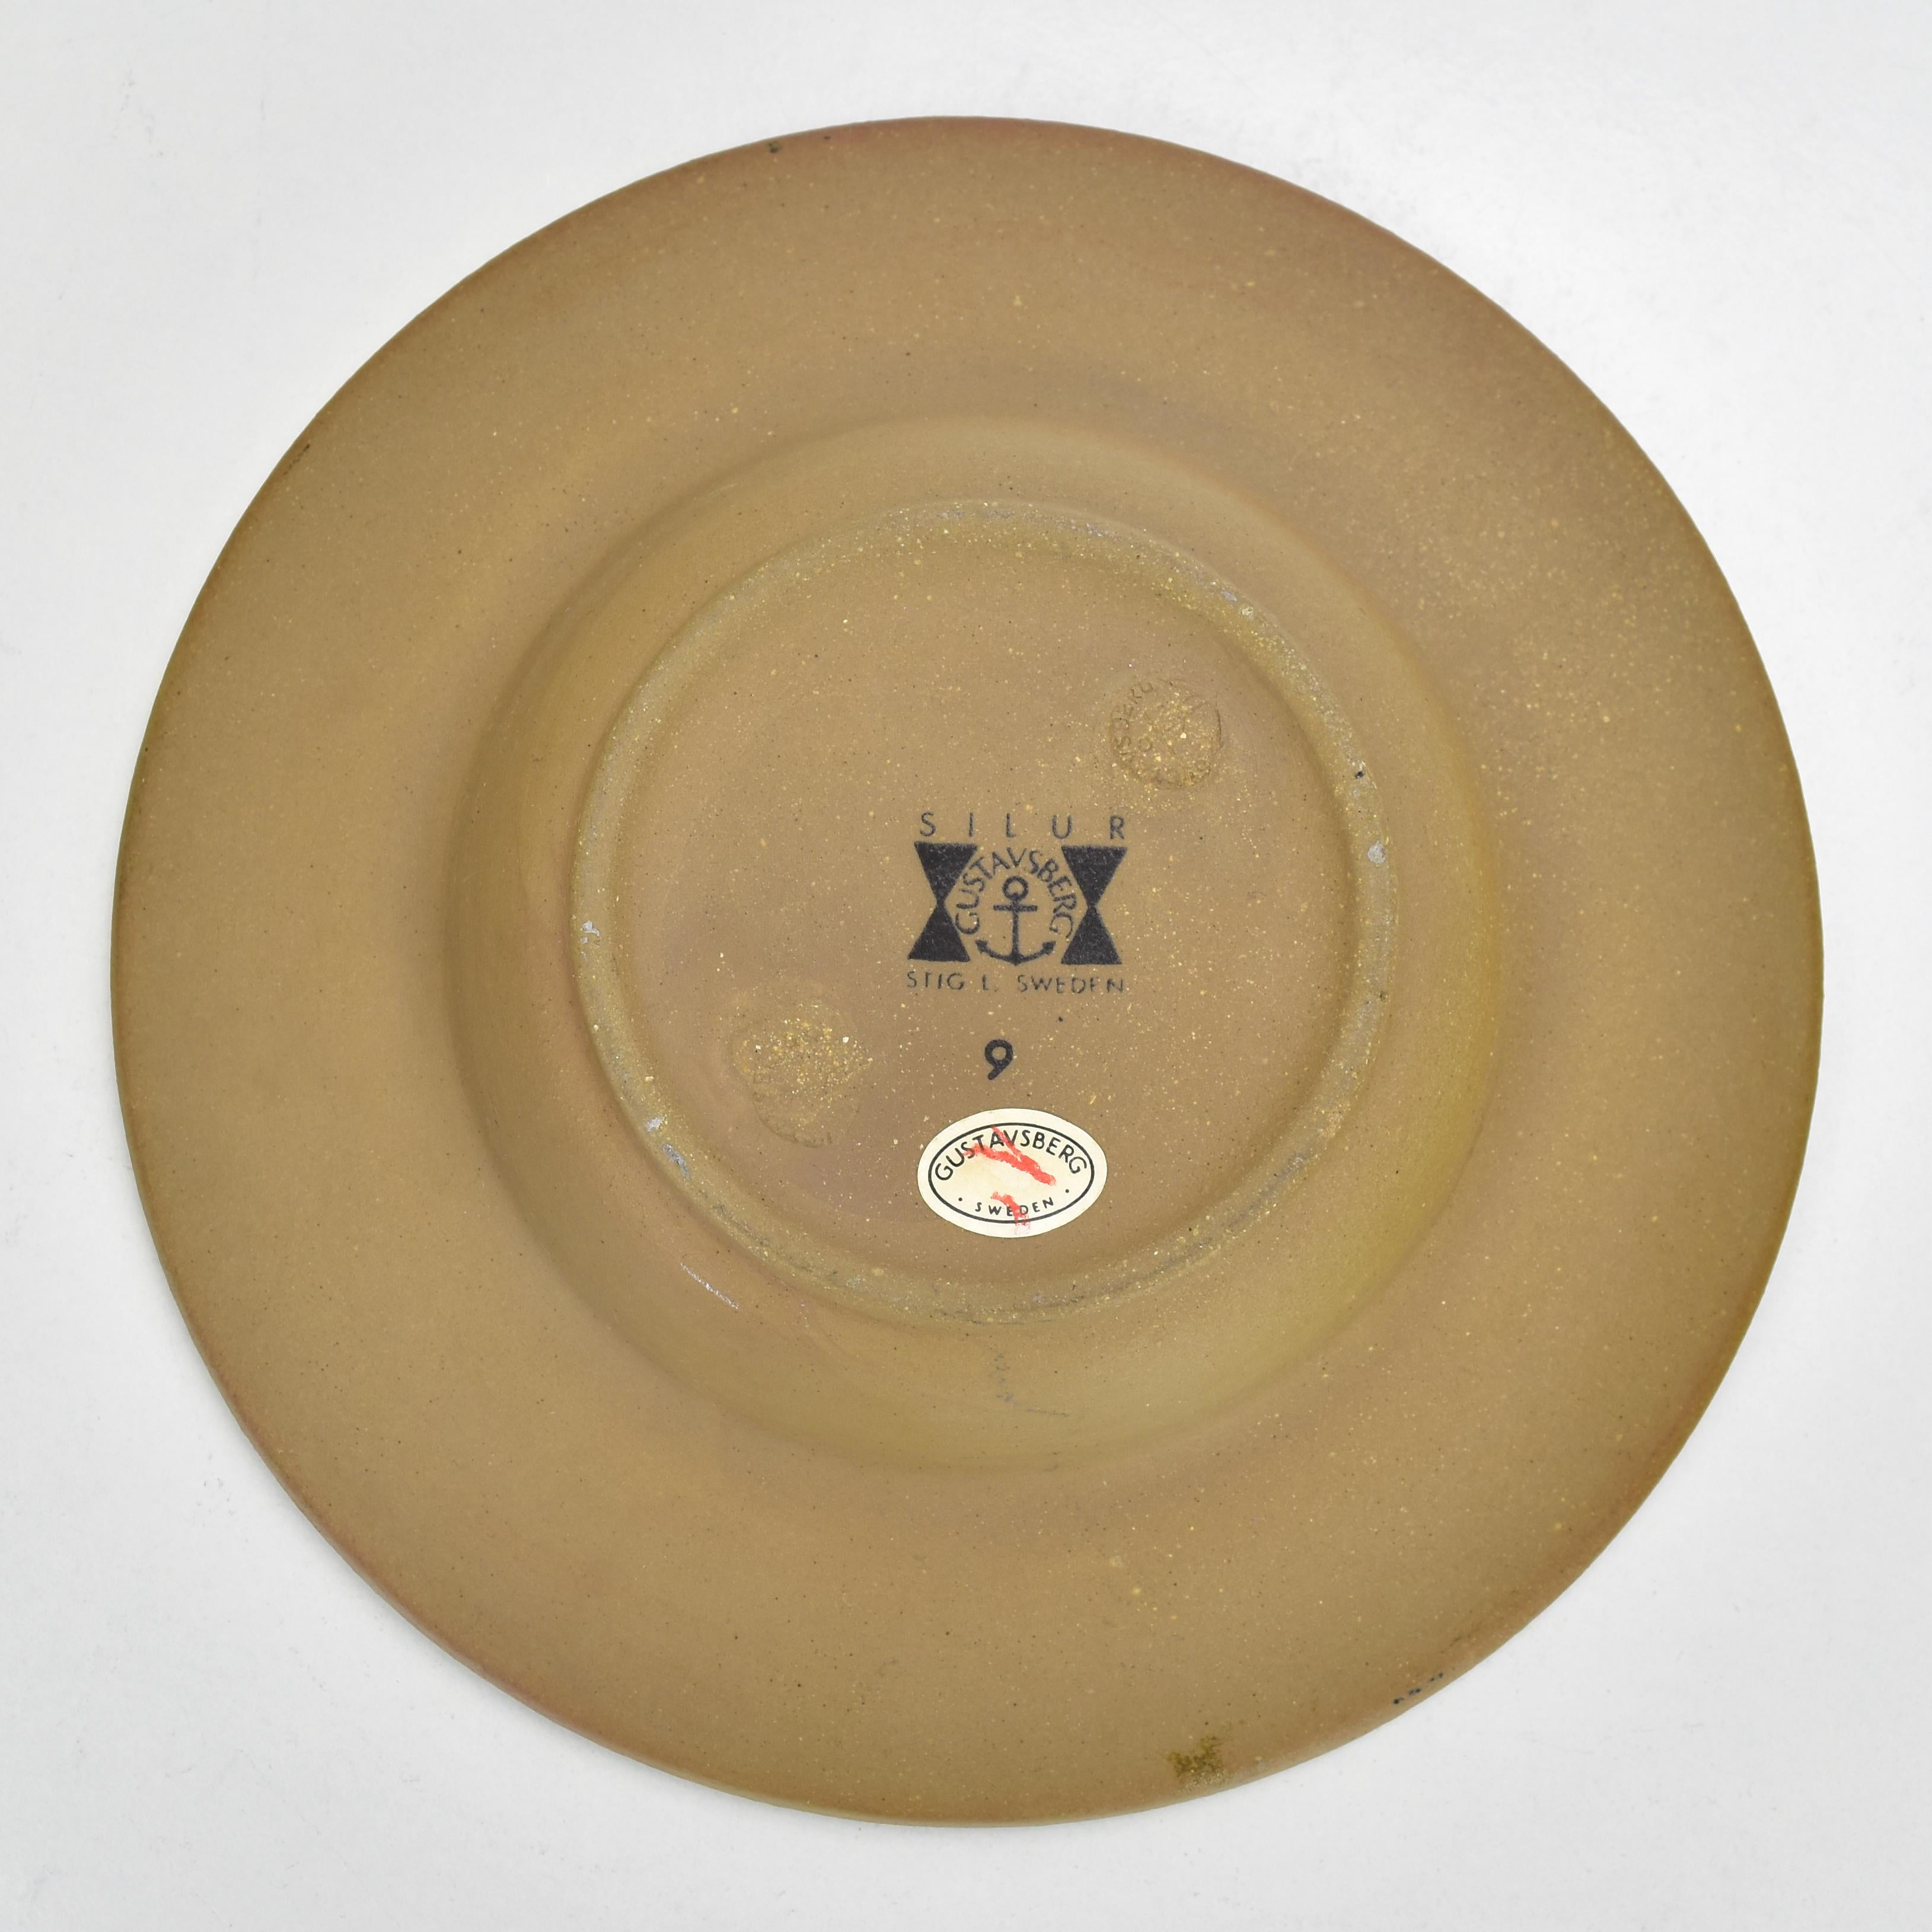 Glazed Gustavsberg Stig Lindberg SILUR Vide Poche Keep All Dish Bowl Stoneware Ceramic For Sale